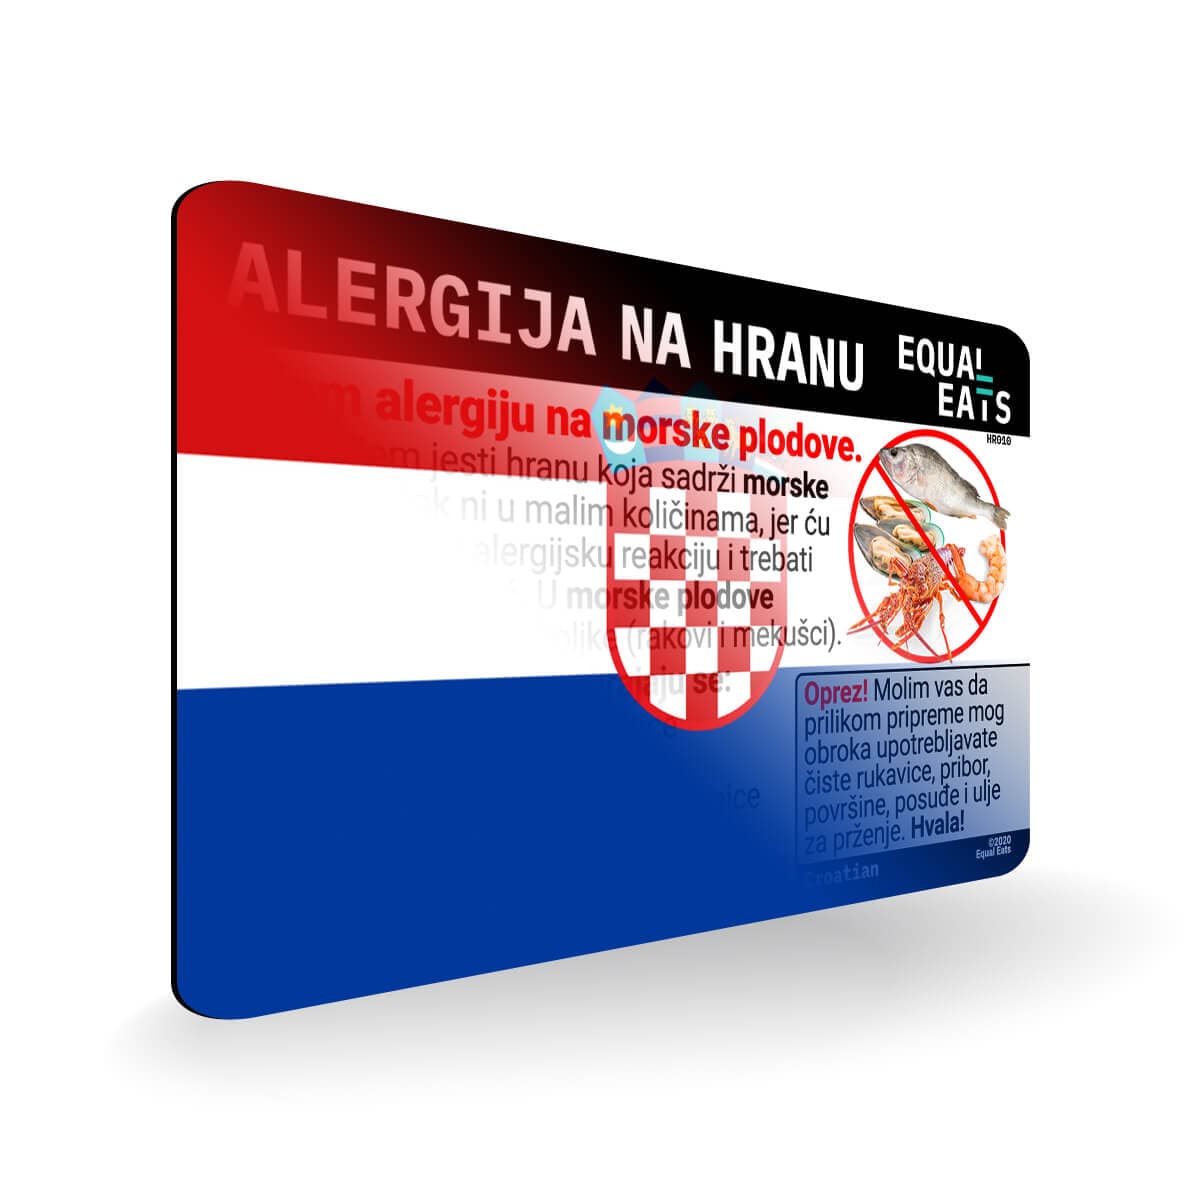 Seafood Allergy in Croatian. Seafood Allergy Card for Croatia